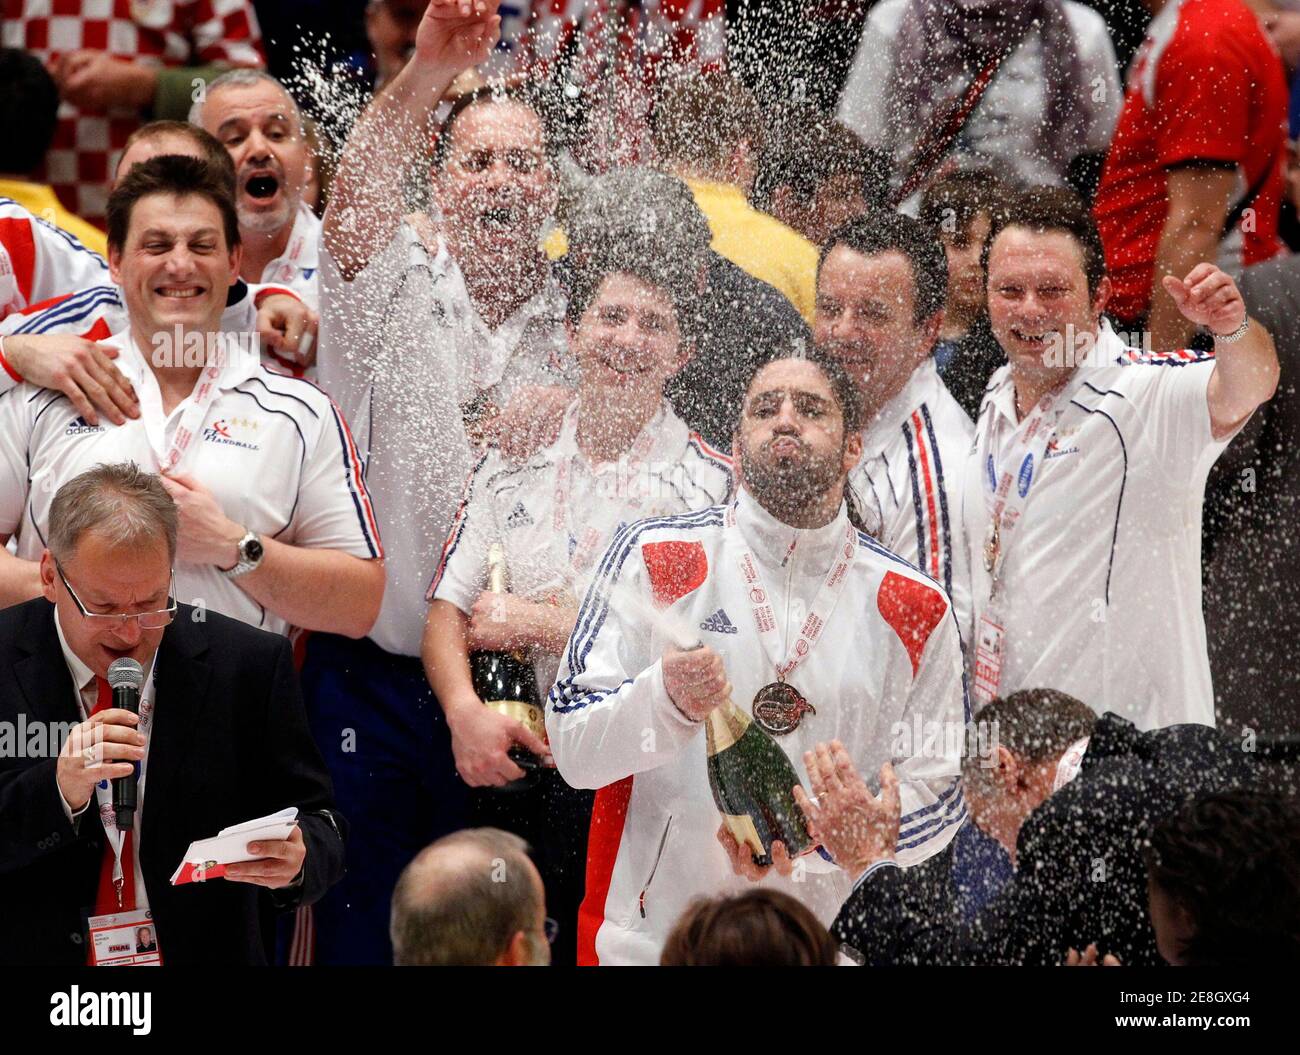 France's team celebrate after winning against Croatia to take the gold medal at the Men's European Handball Championship in Vienna, January 31, 2010.           REUTERS/Oleg Popov   (AUSTRIA - Tags: SPORT HANDBALL) Stock Photo